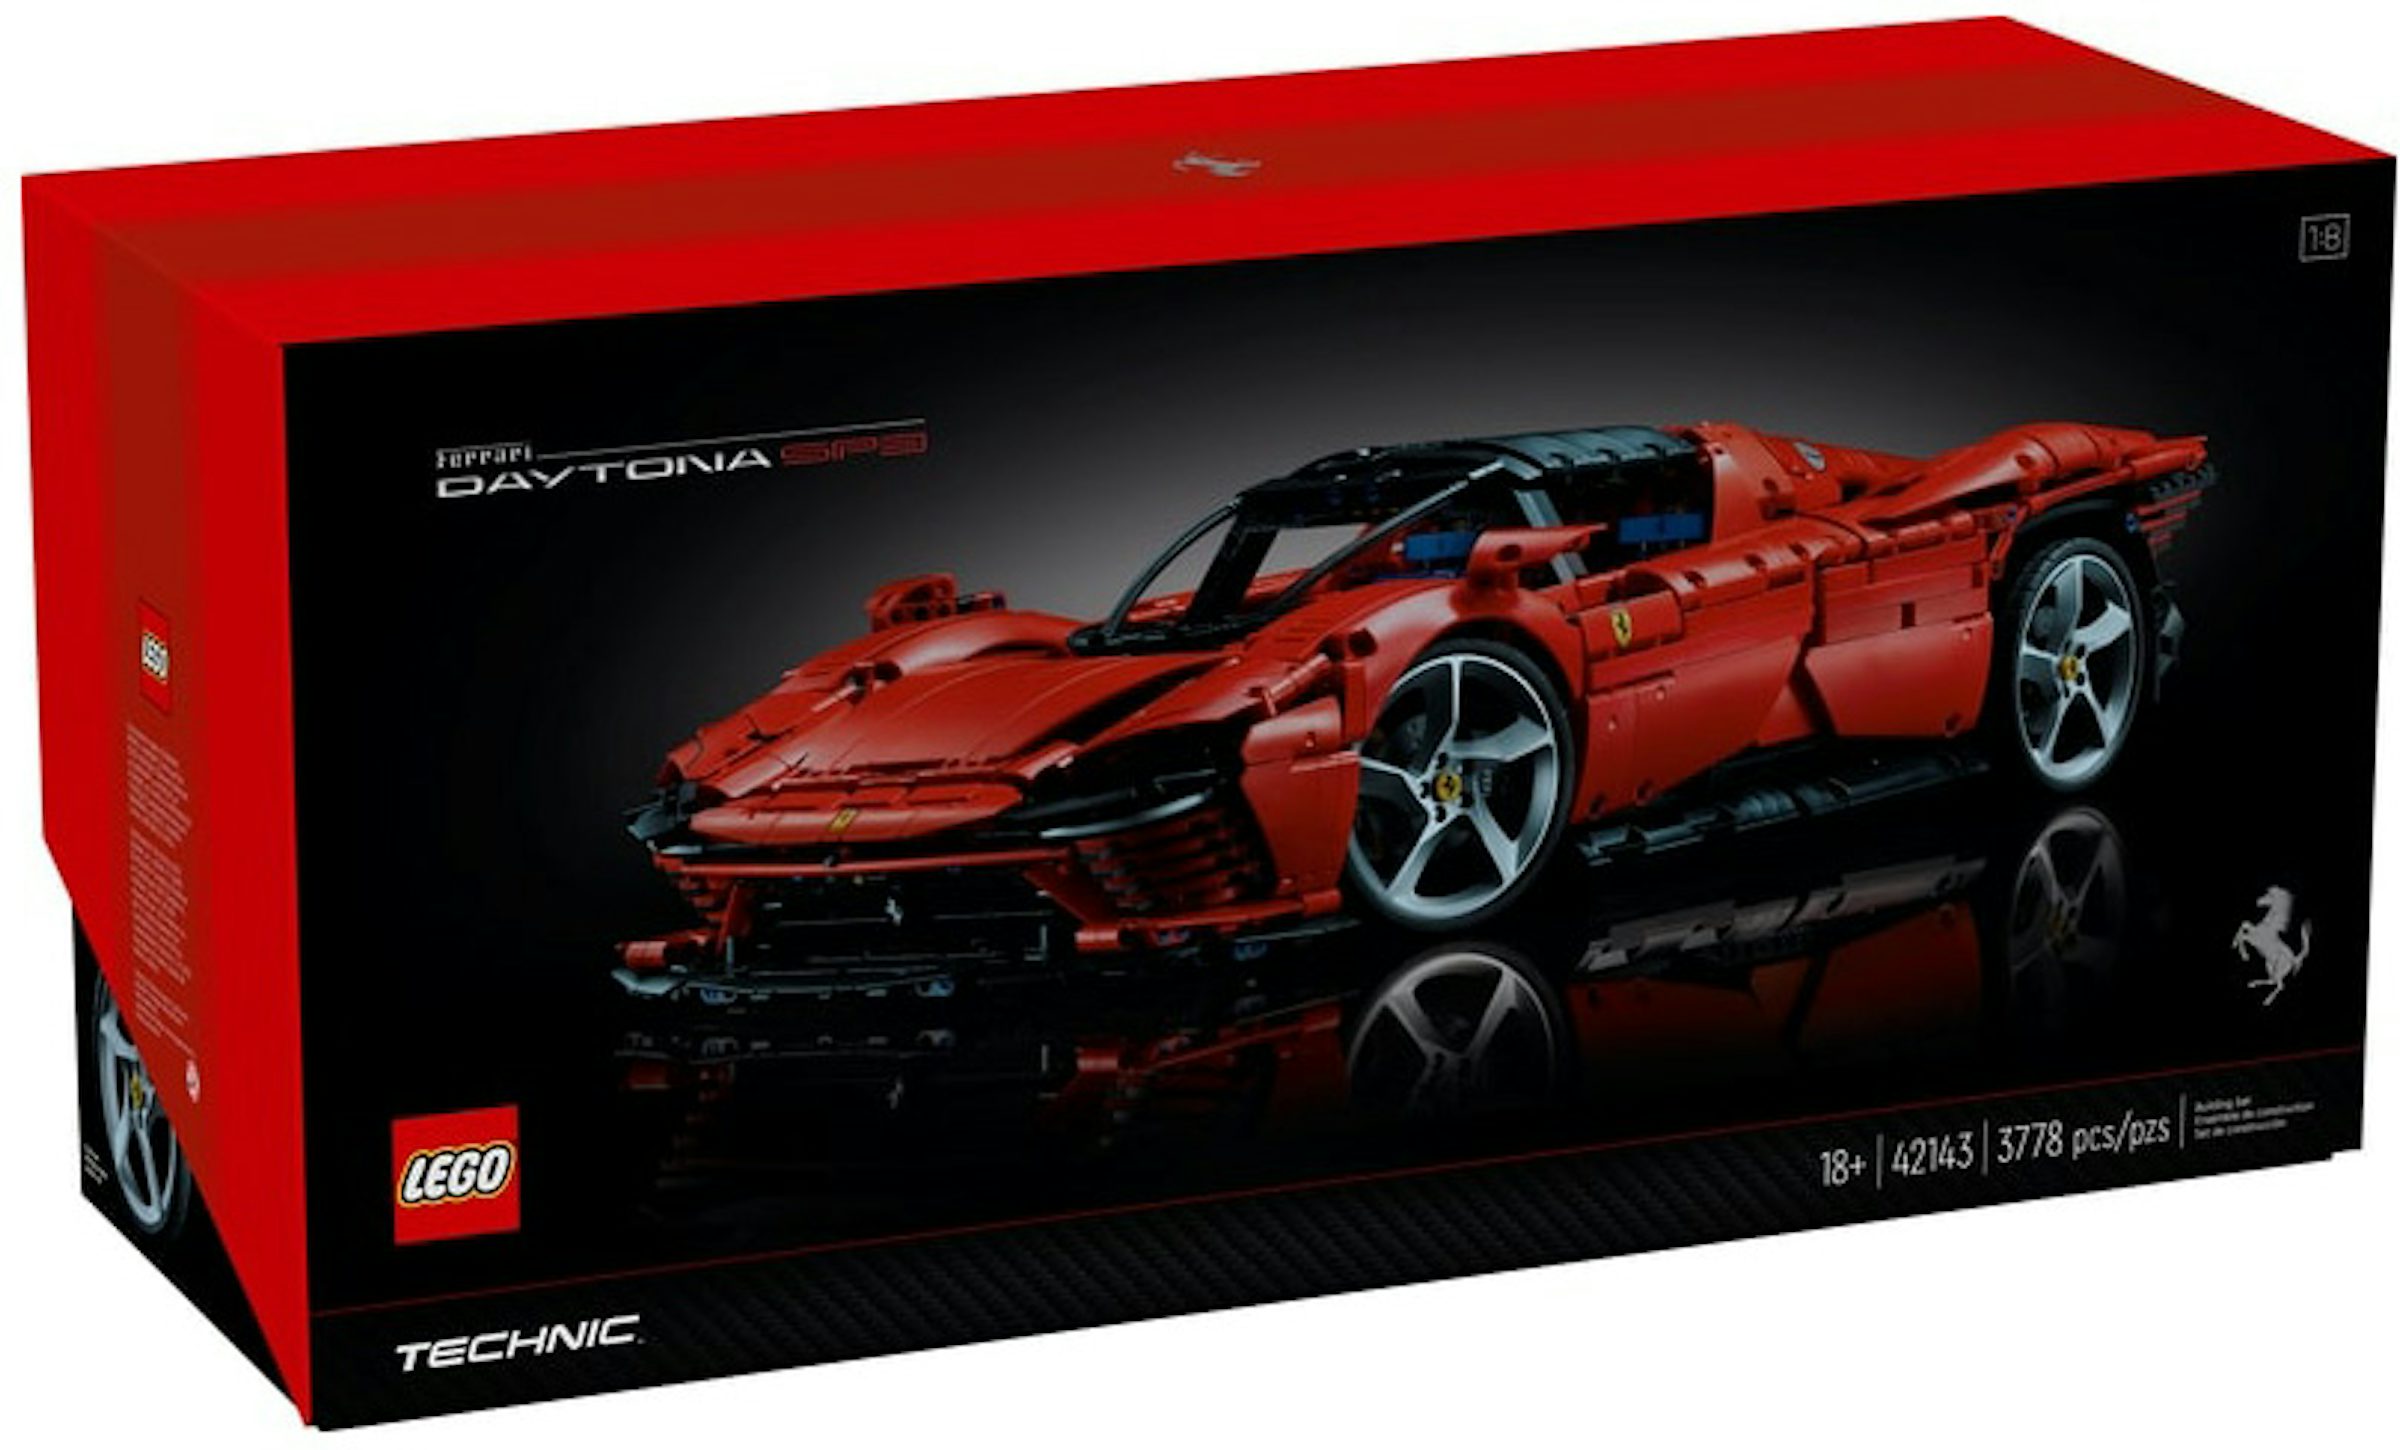 LEGO Technic Ferrari Daytona SP3 Set 42143 - US